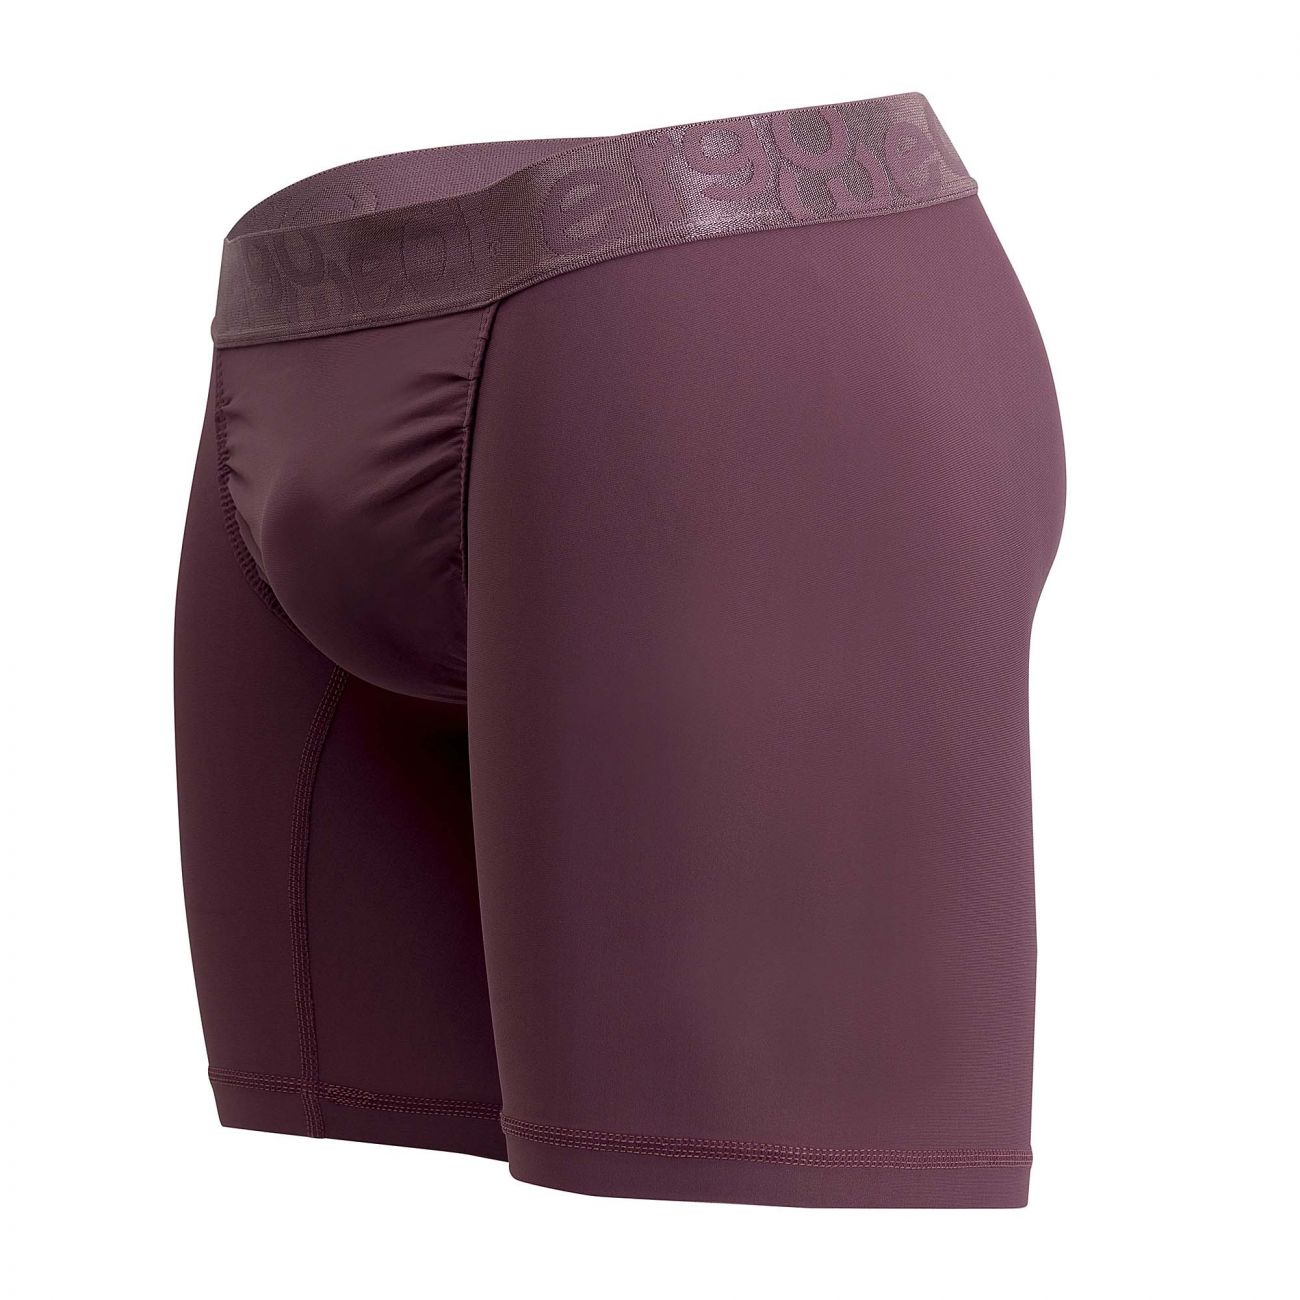 Mens Underwear: ErgoWear EW0995 FEEL XV Boxer Briefs | eBay